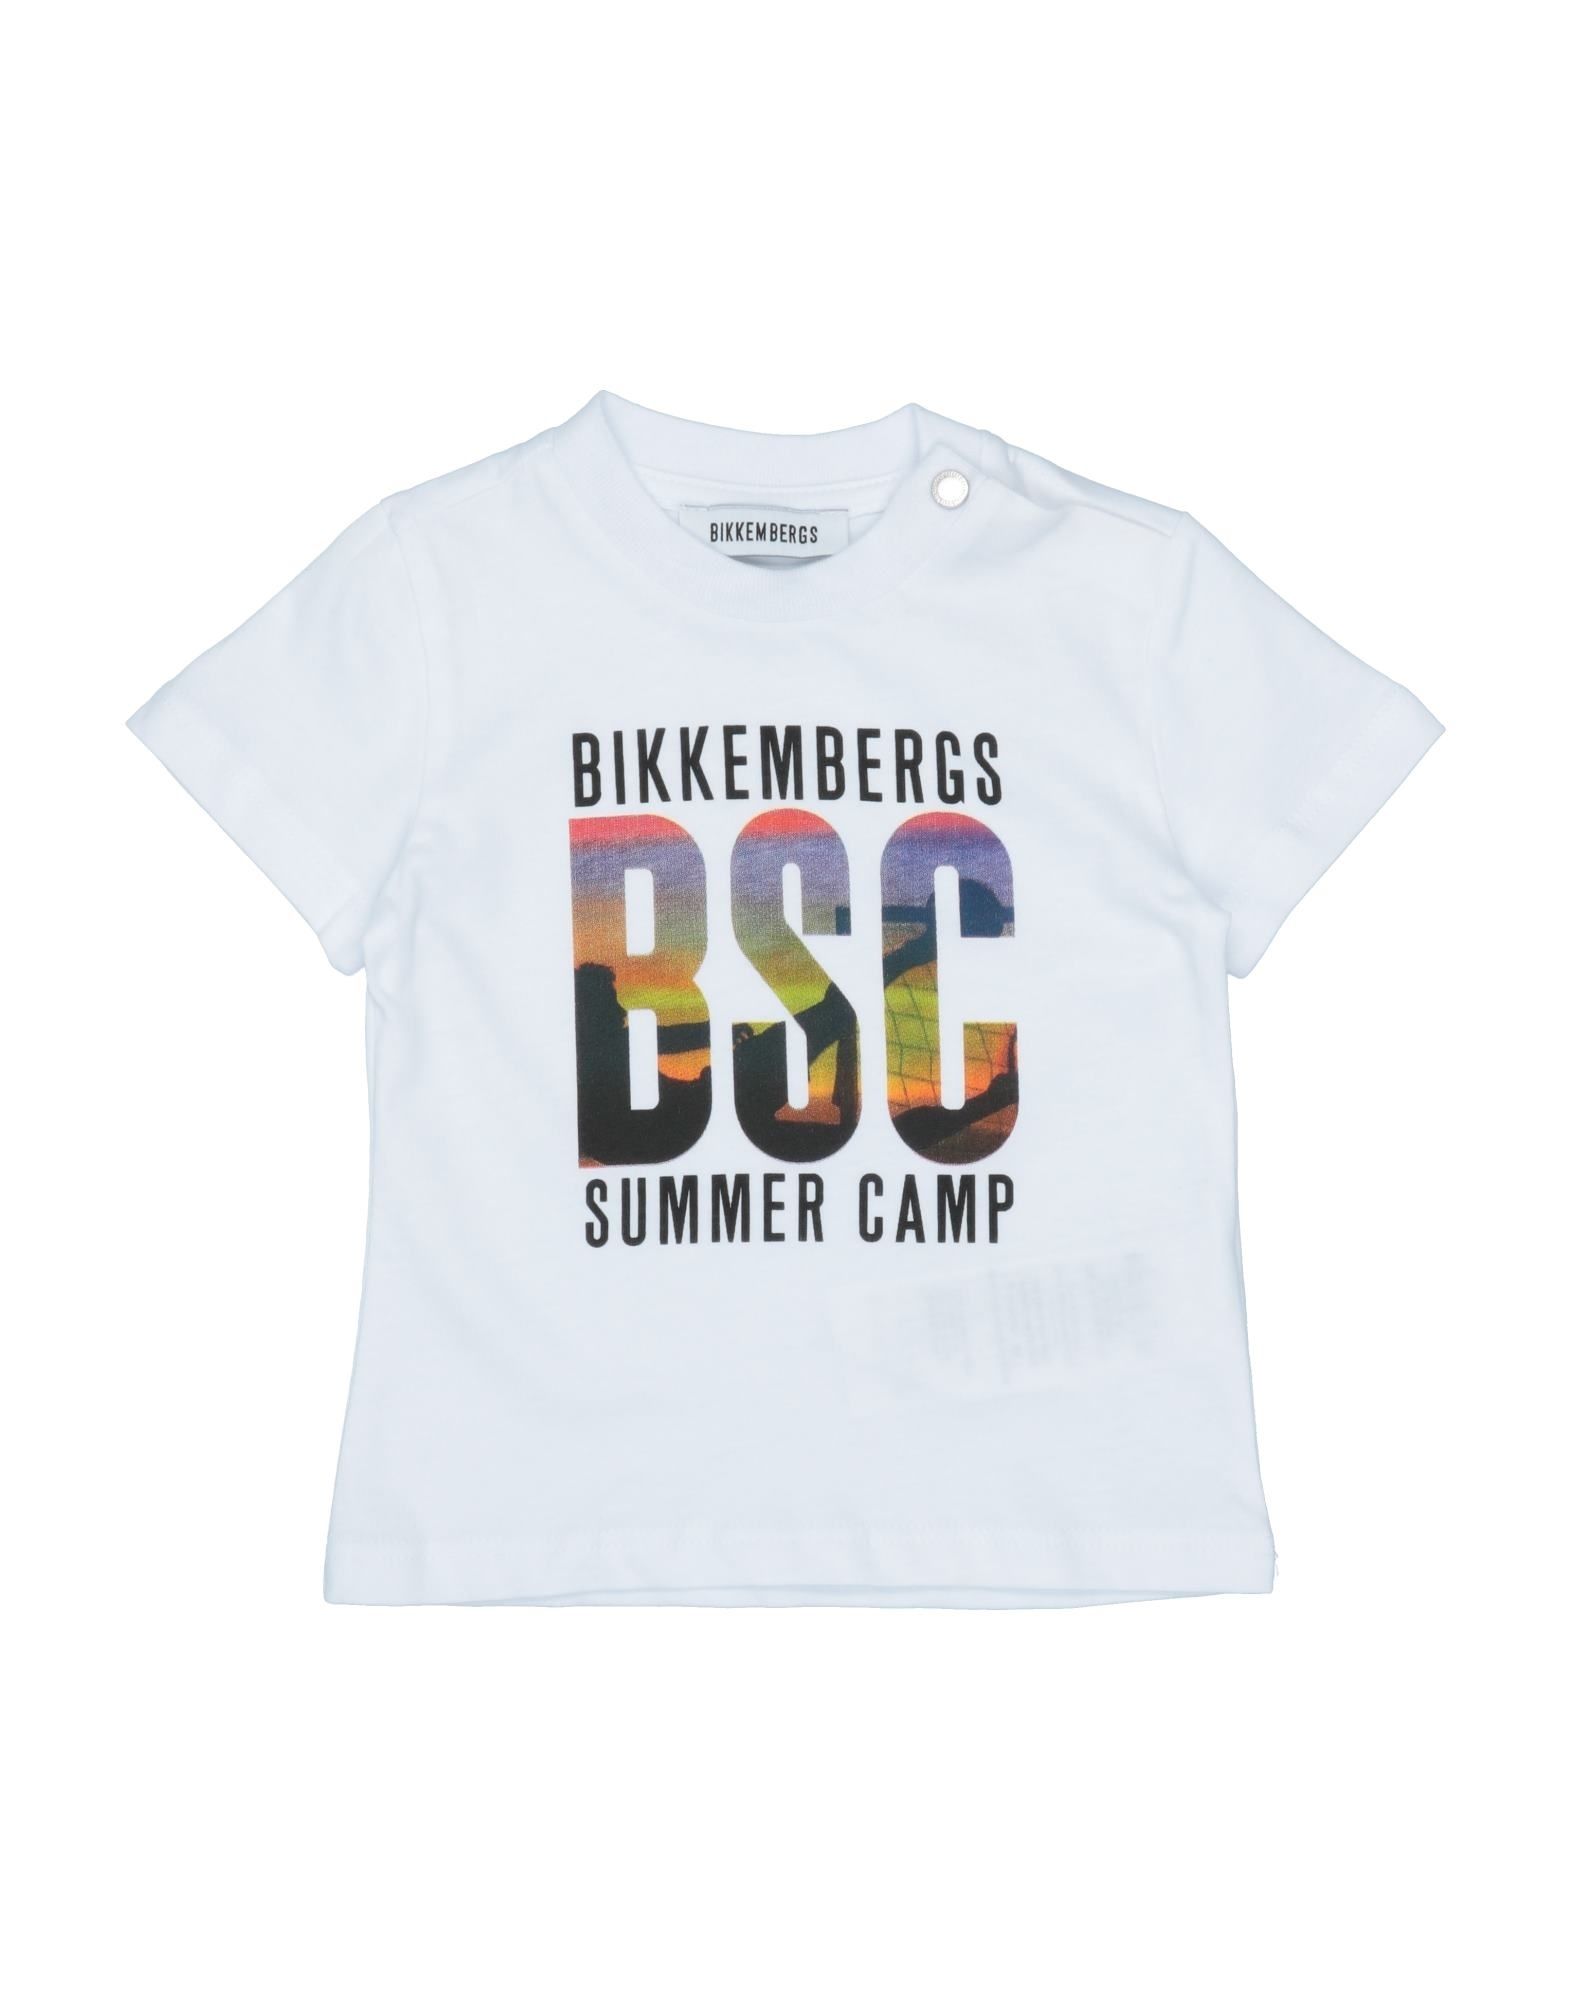  Bikkembergs - Tops - T-shirts - On Yoox.com 